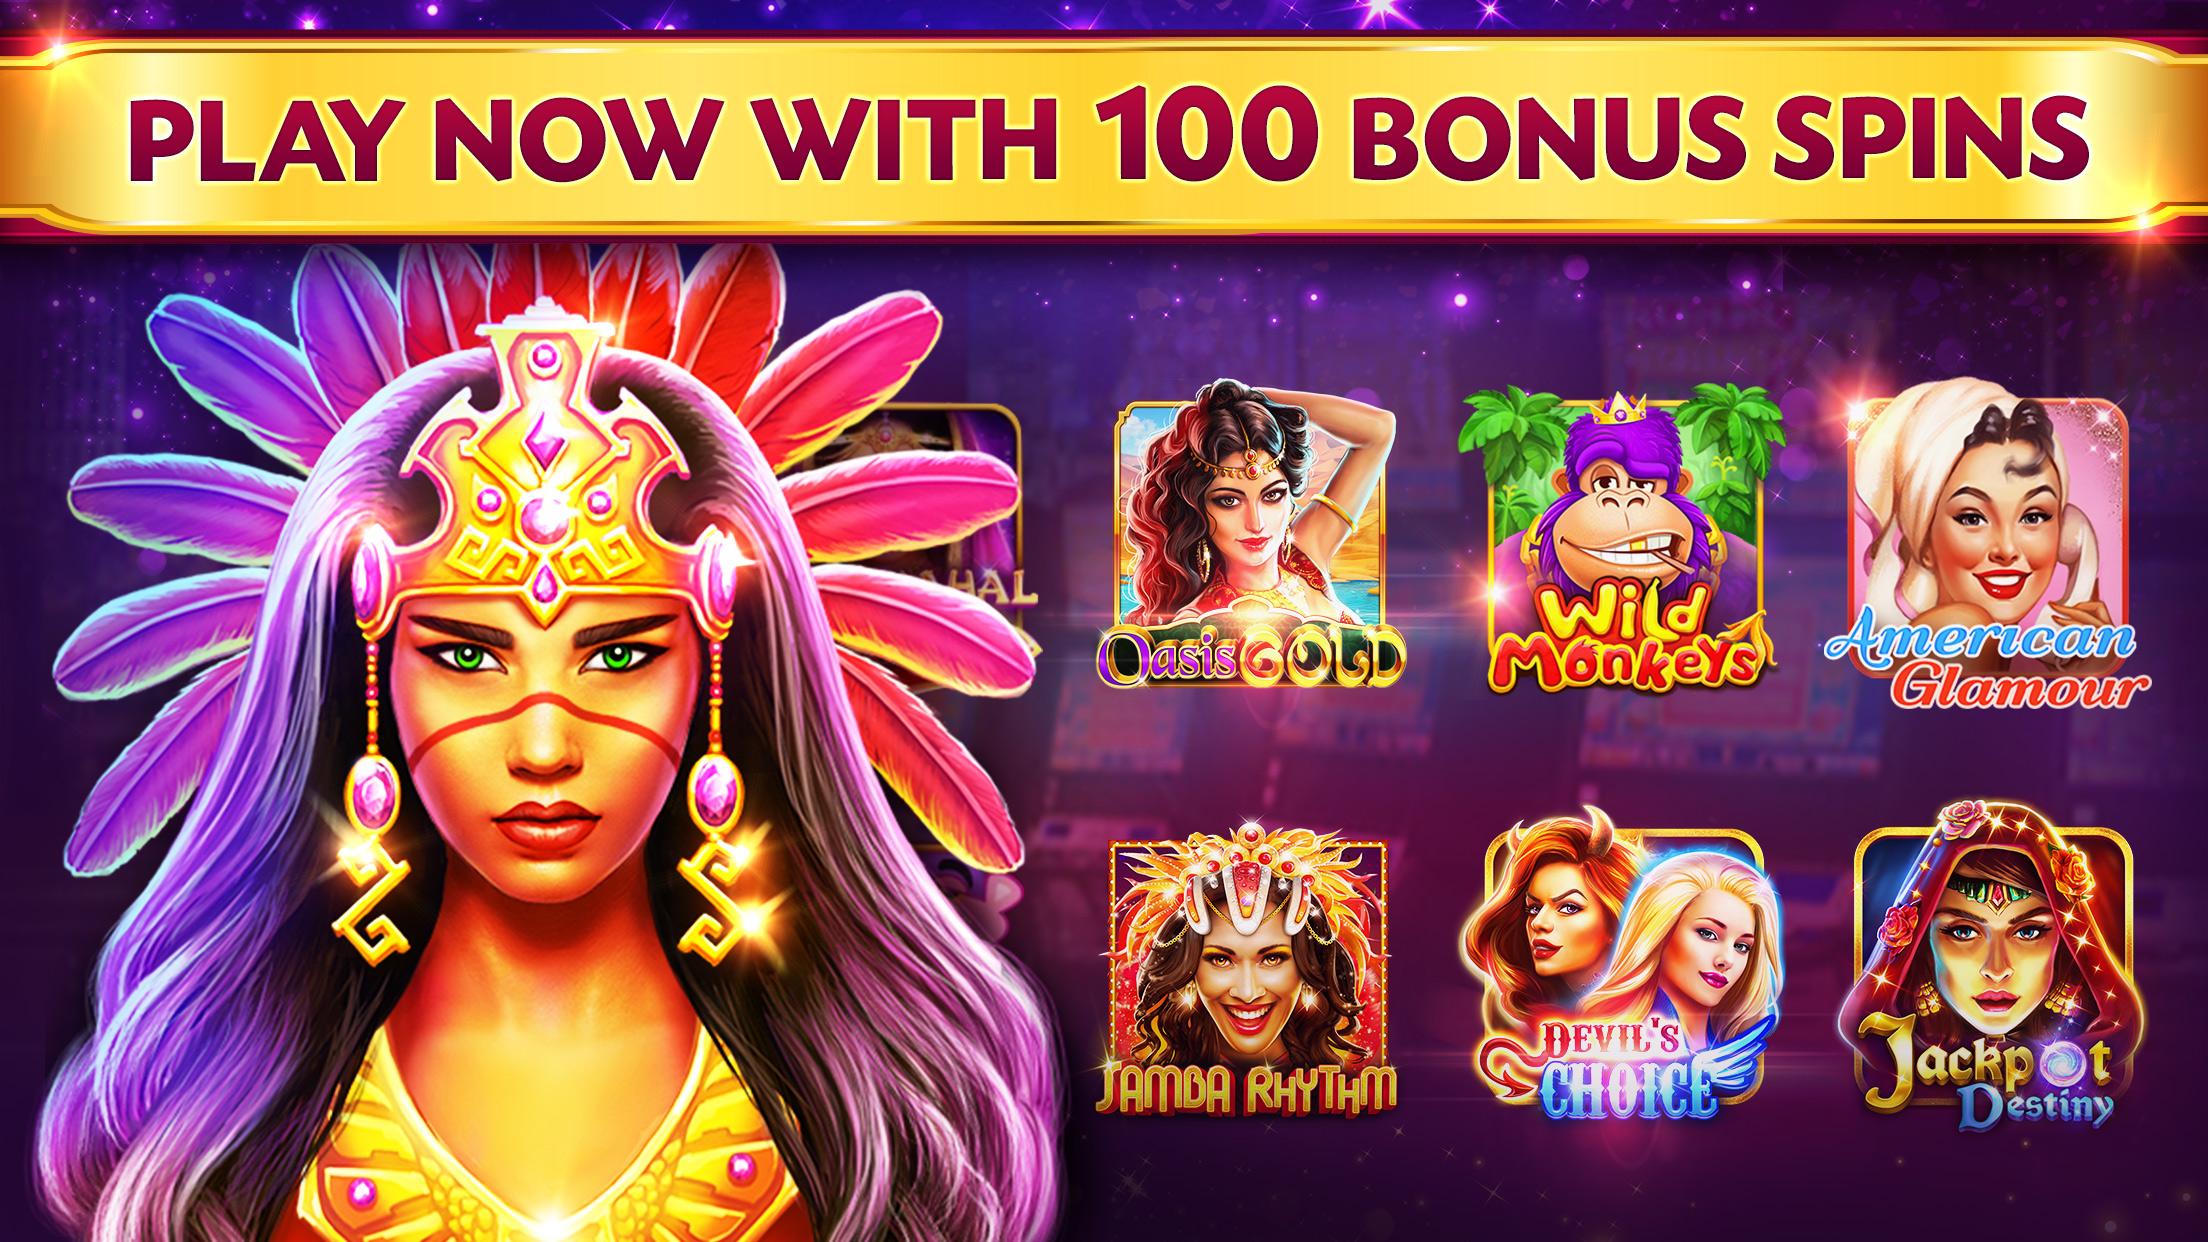 Caesars casino online free slots Restless wizard of oz online slots machine free play